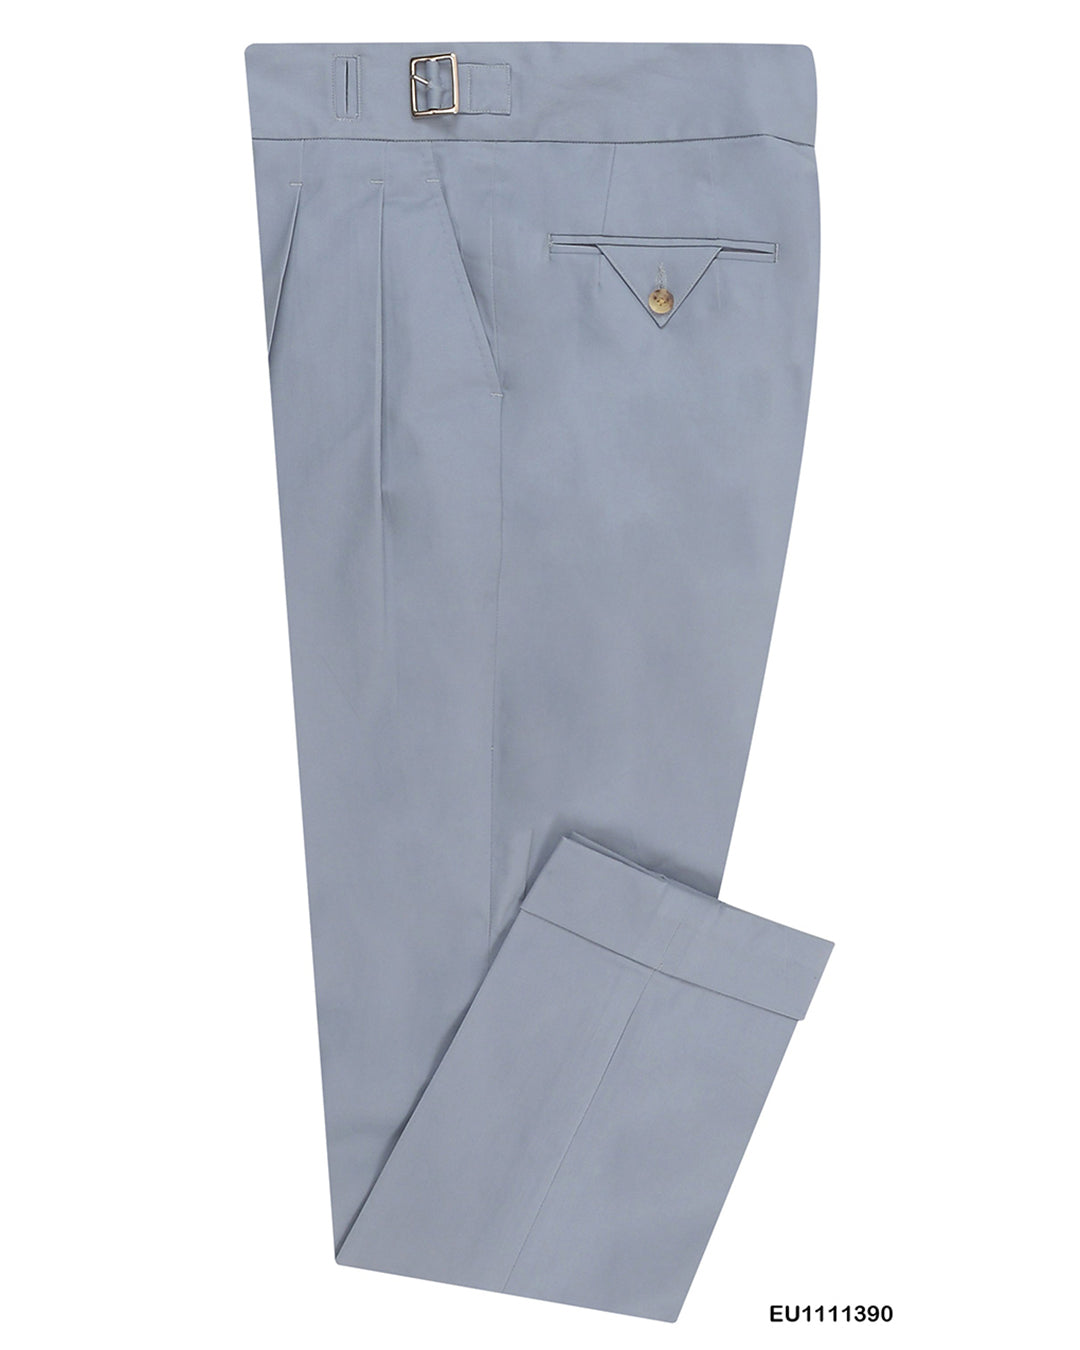 Gurkha Pant in Soft Blue Grey Stretch Twill Pants